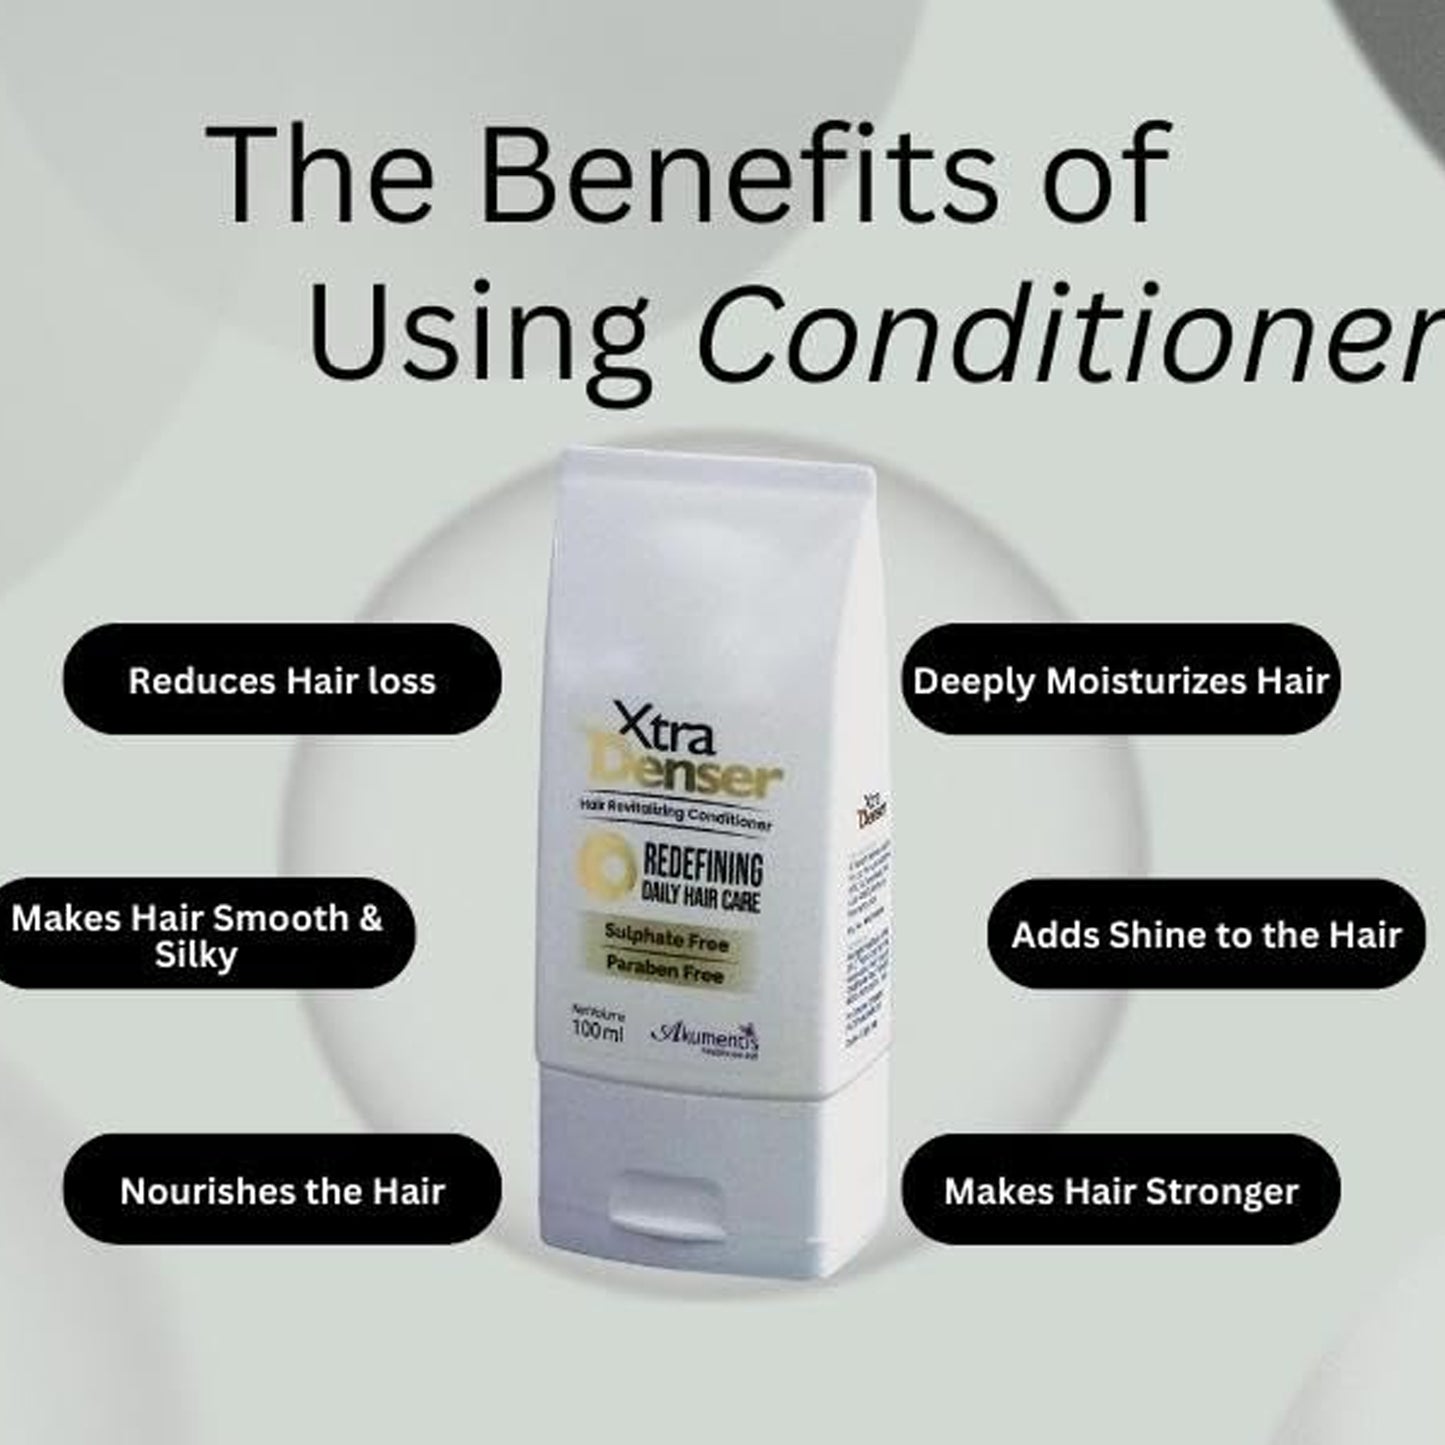 Xtra Denser Hair Revitalizing Conditioner, 100ml